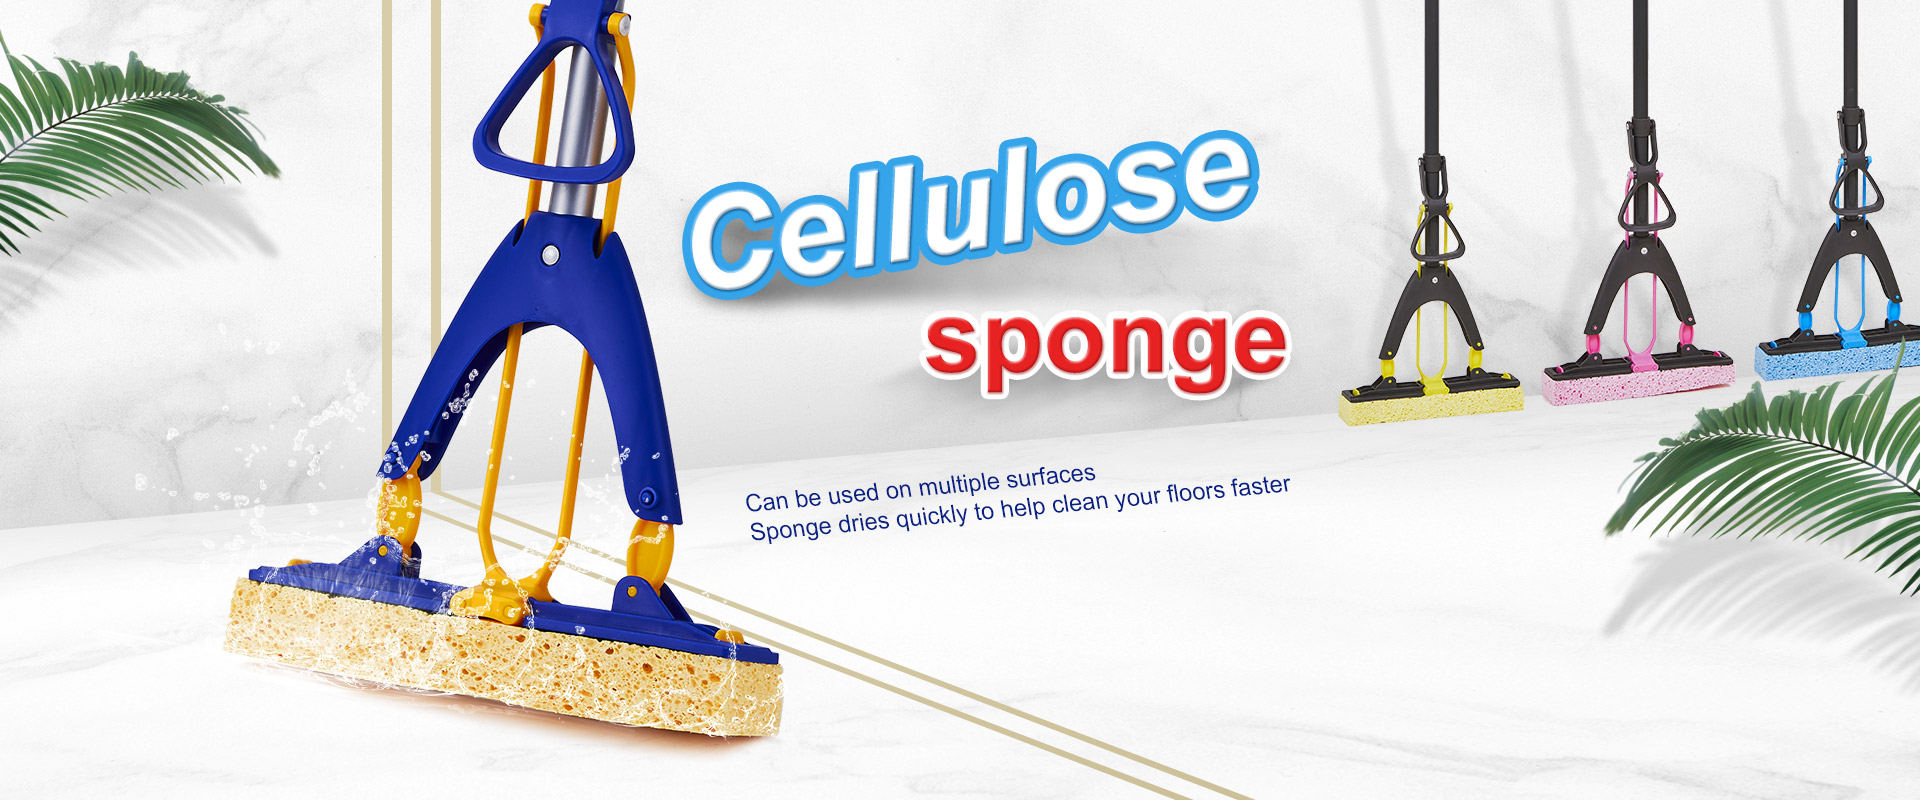 Cellulose sponjy